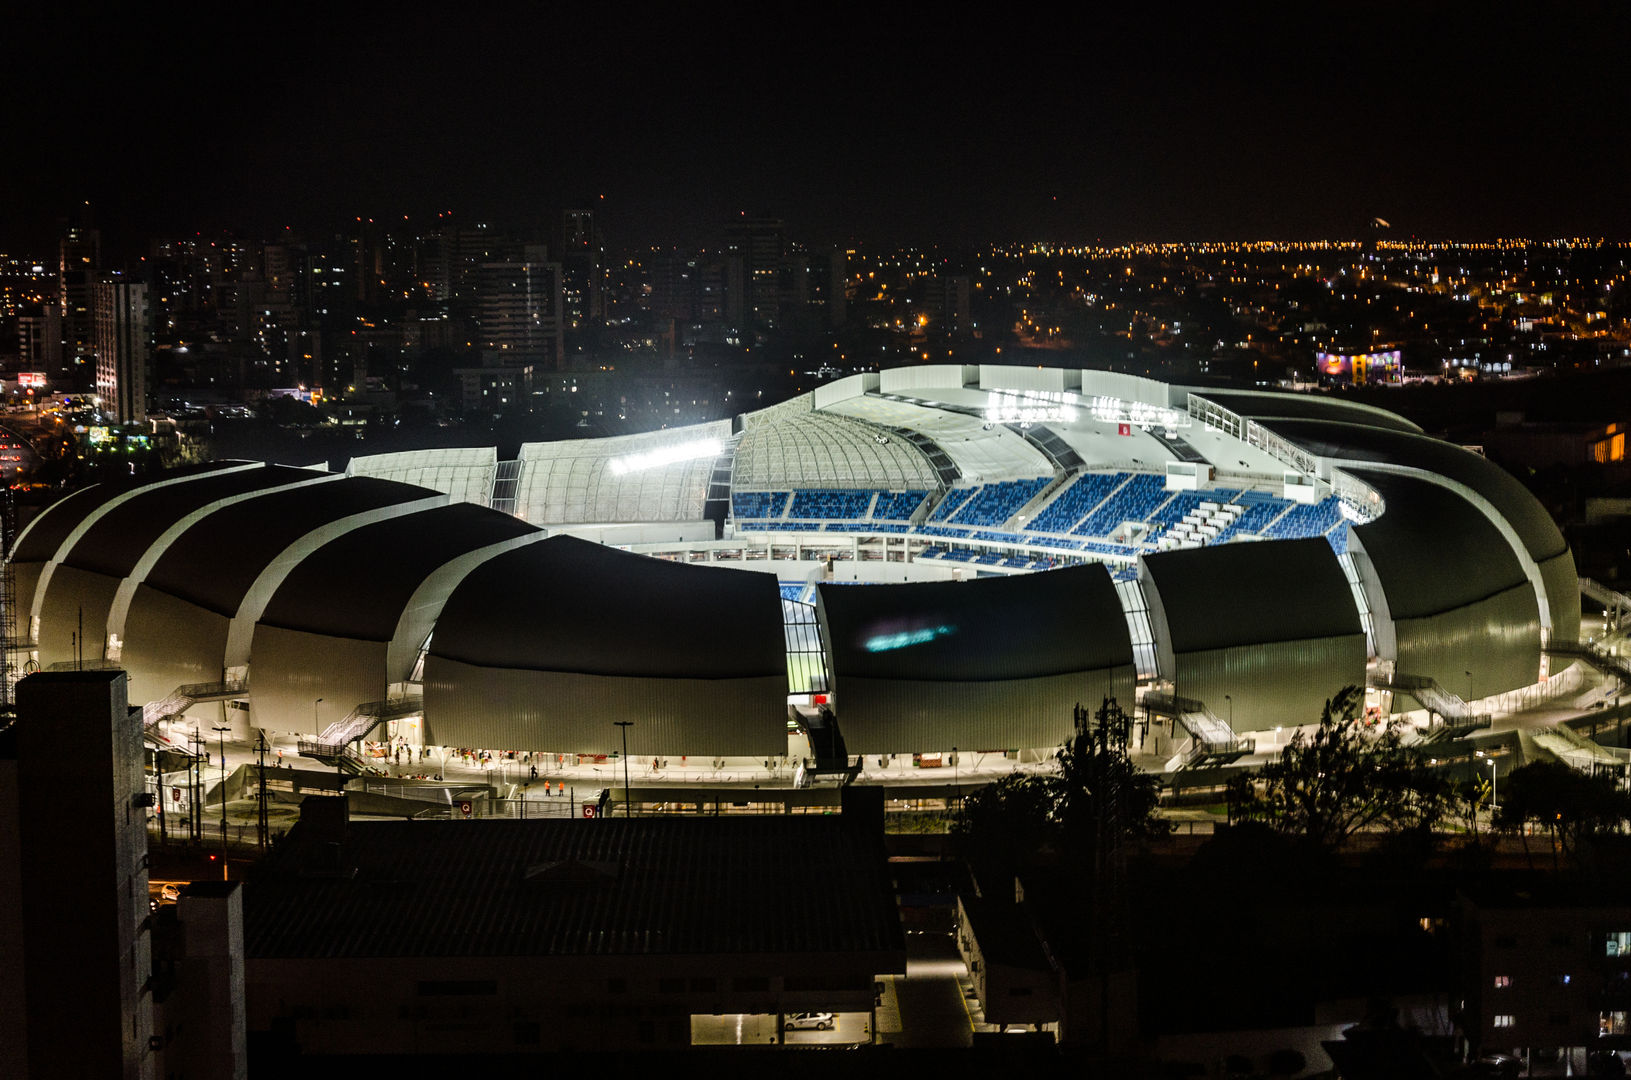 World Cup 2014 Arena das Dunas, Populous Populous Commercial spaces